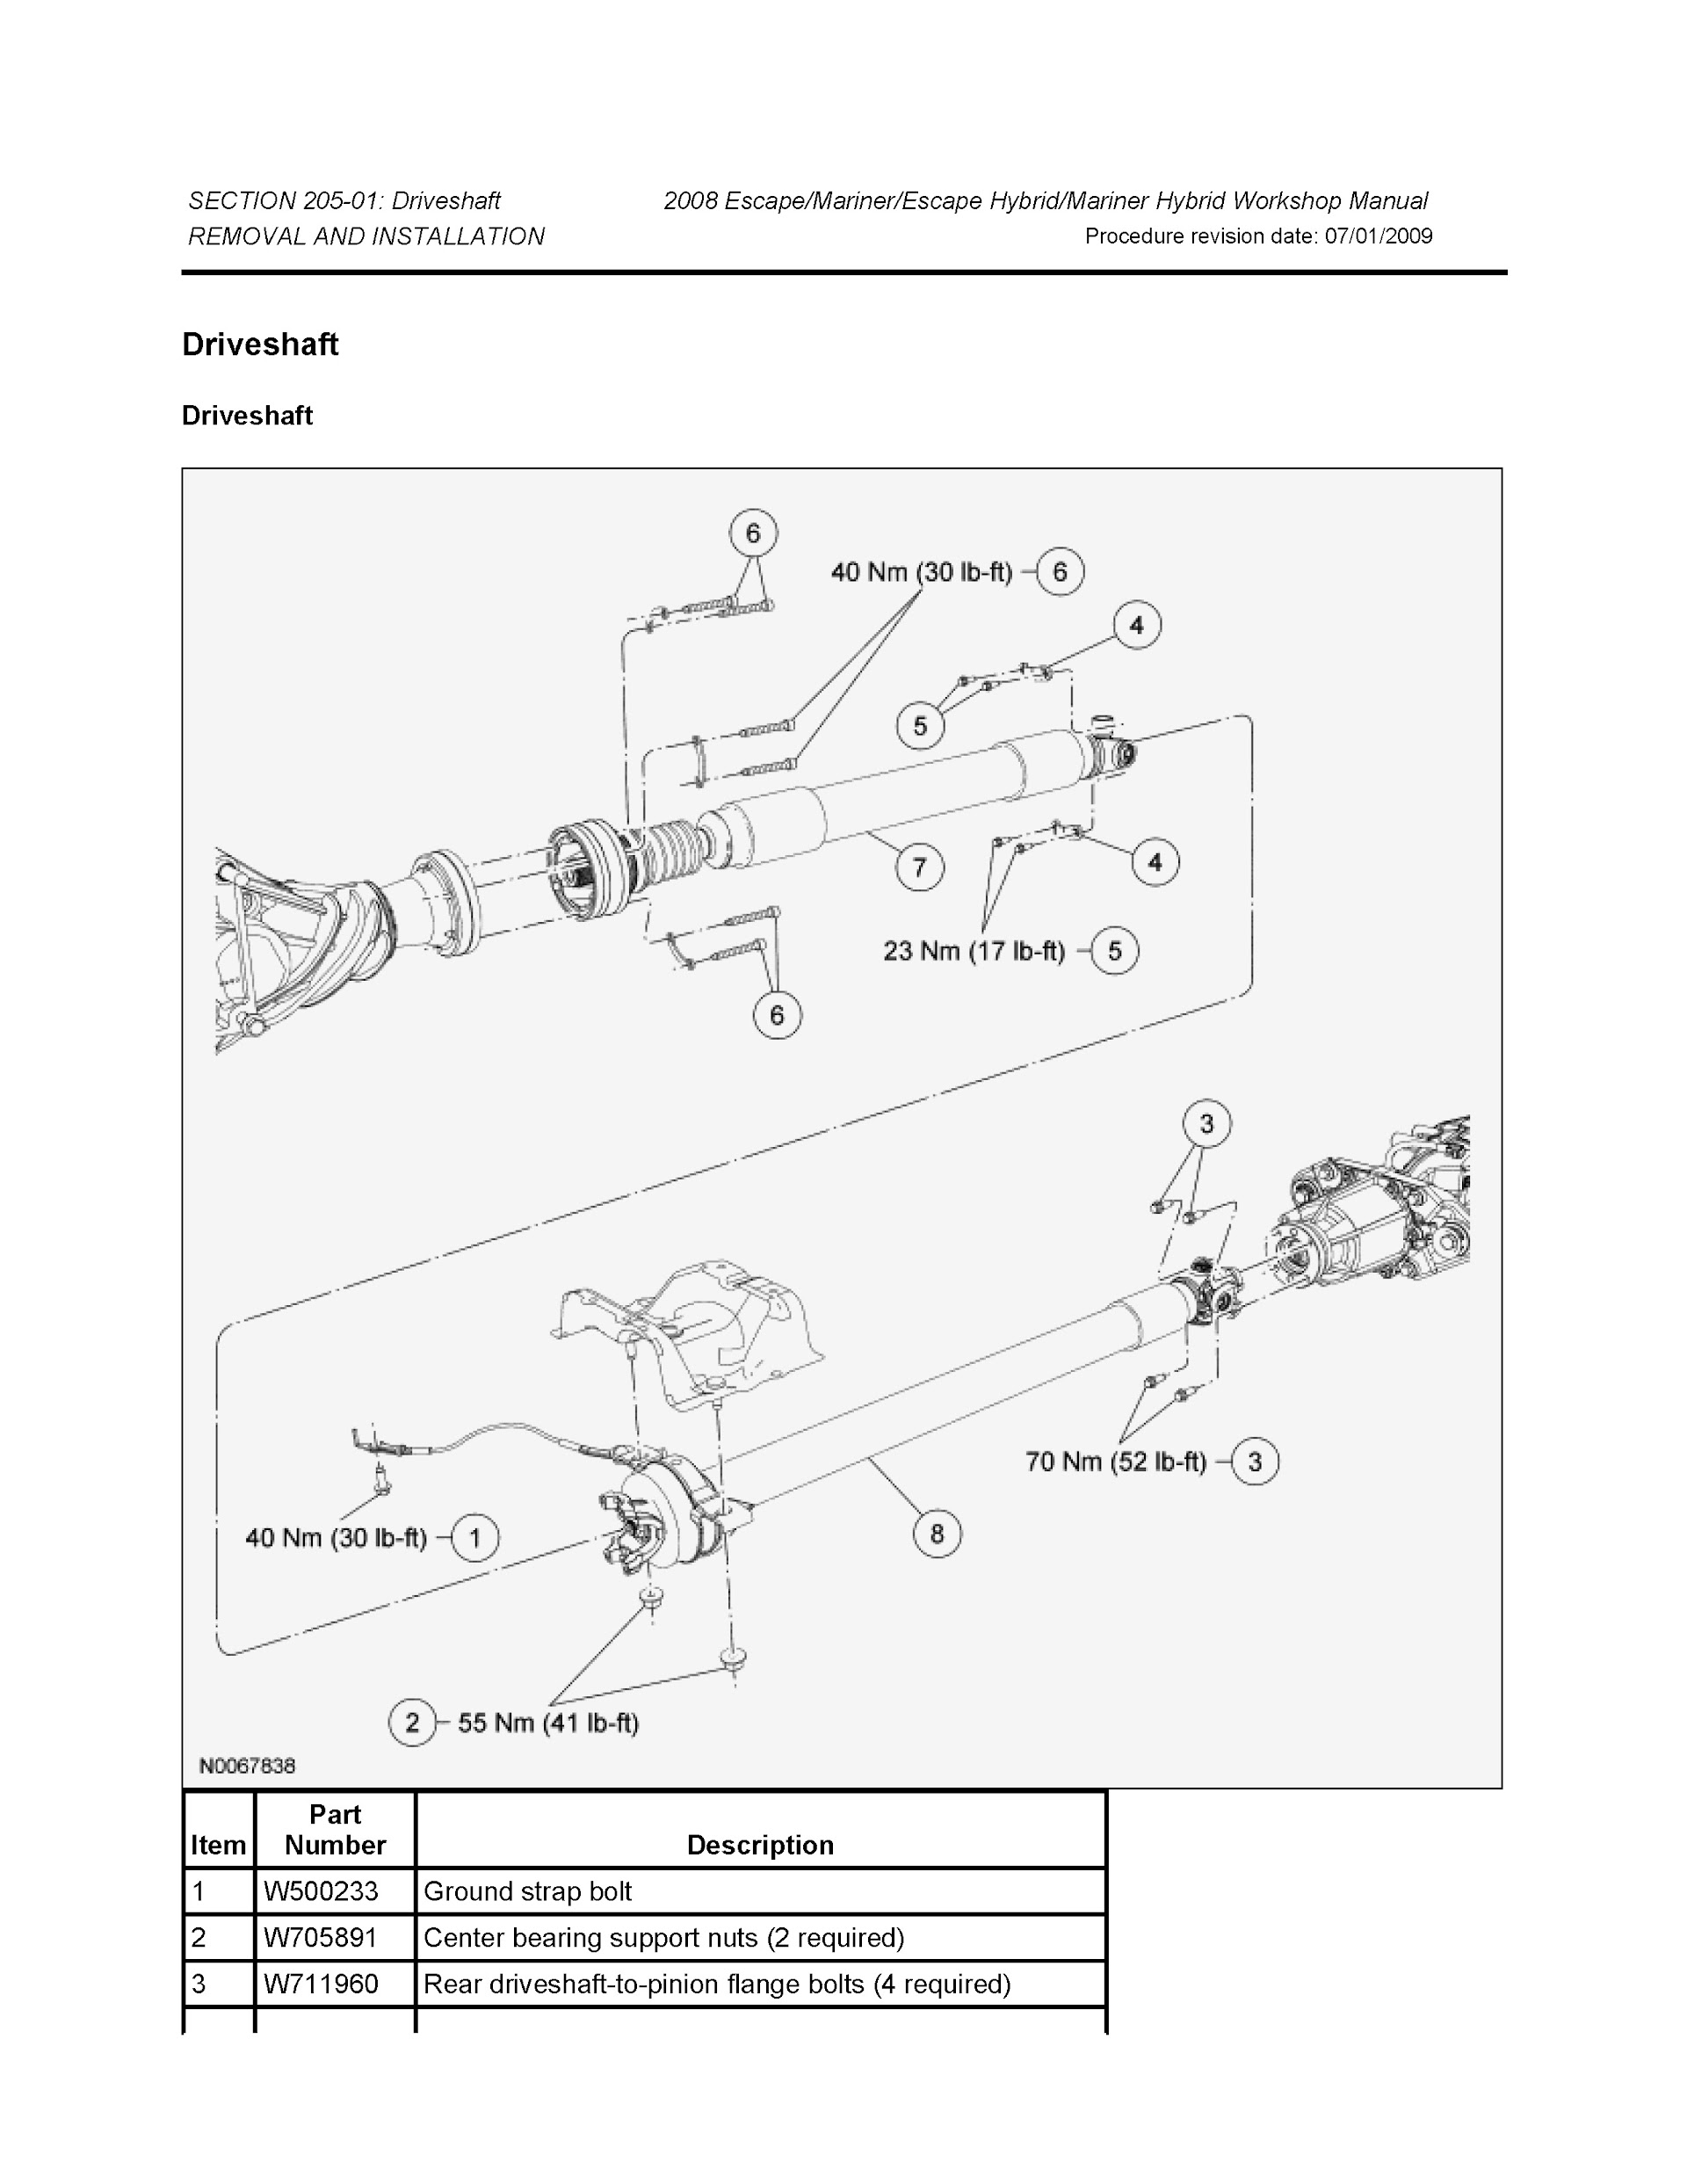 2011 Ford Escape Repair Manual Driveshaft